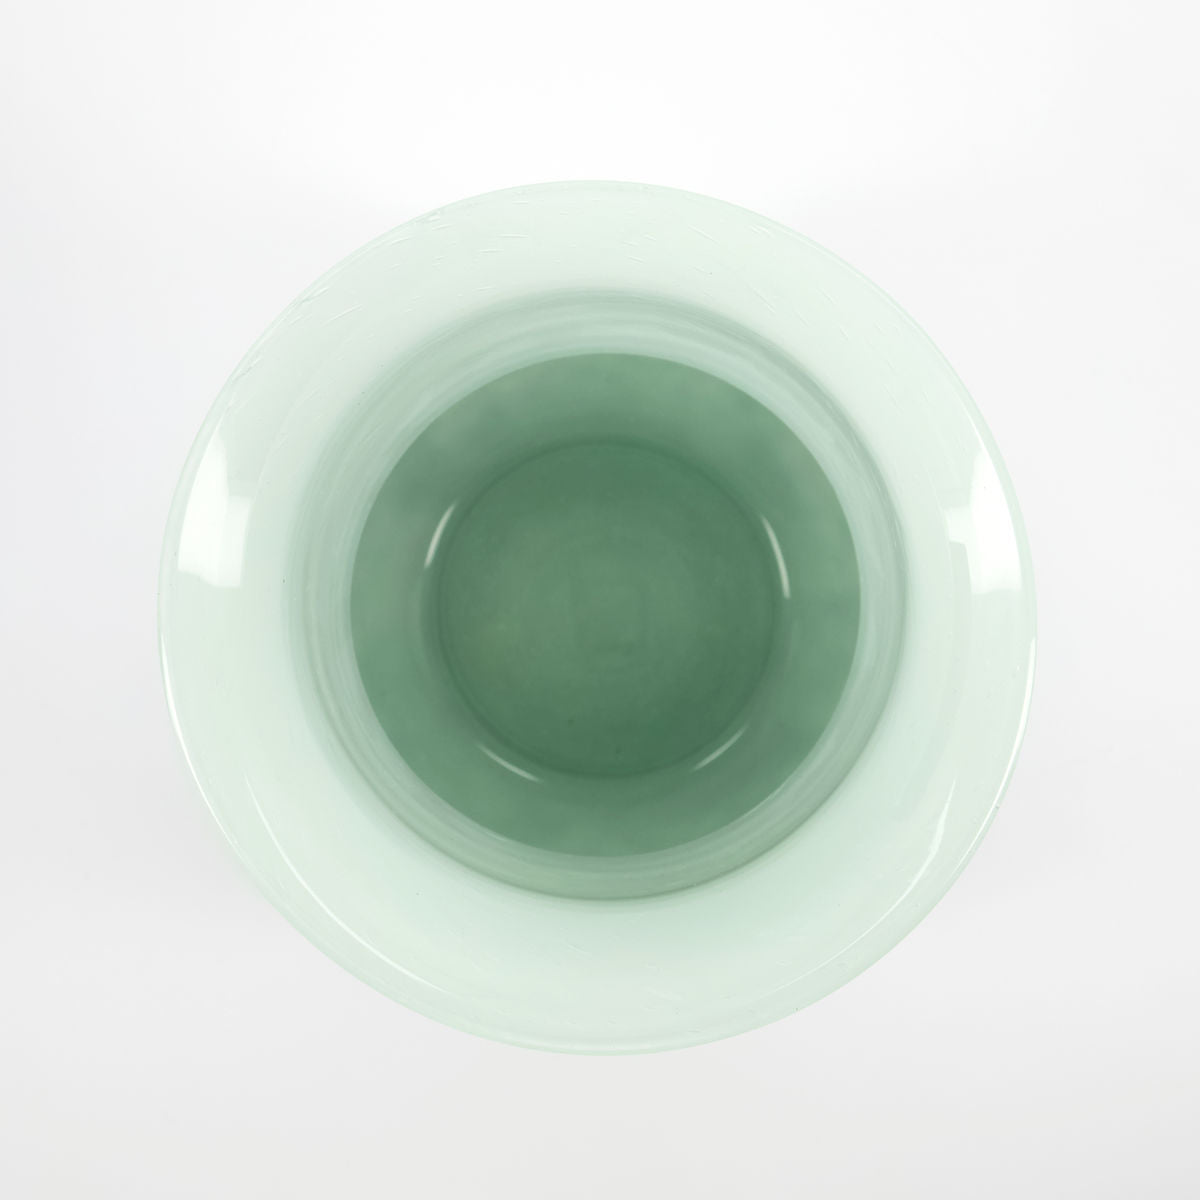 House Doctor Vase, Mint, Green